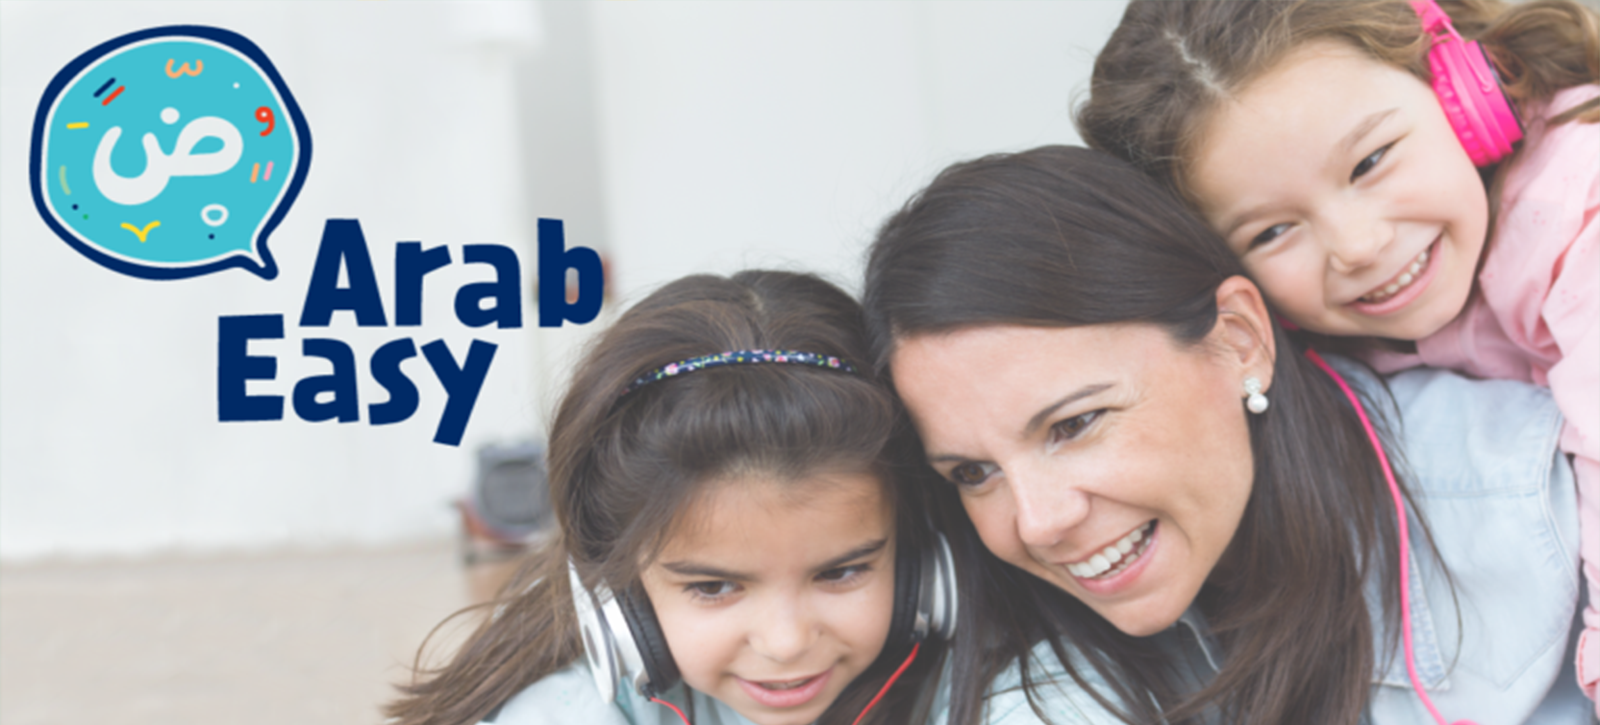 Introducing ArabEasy: An Arabic language app for kids